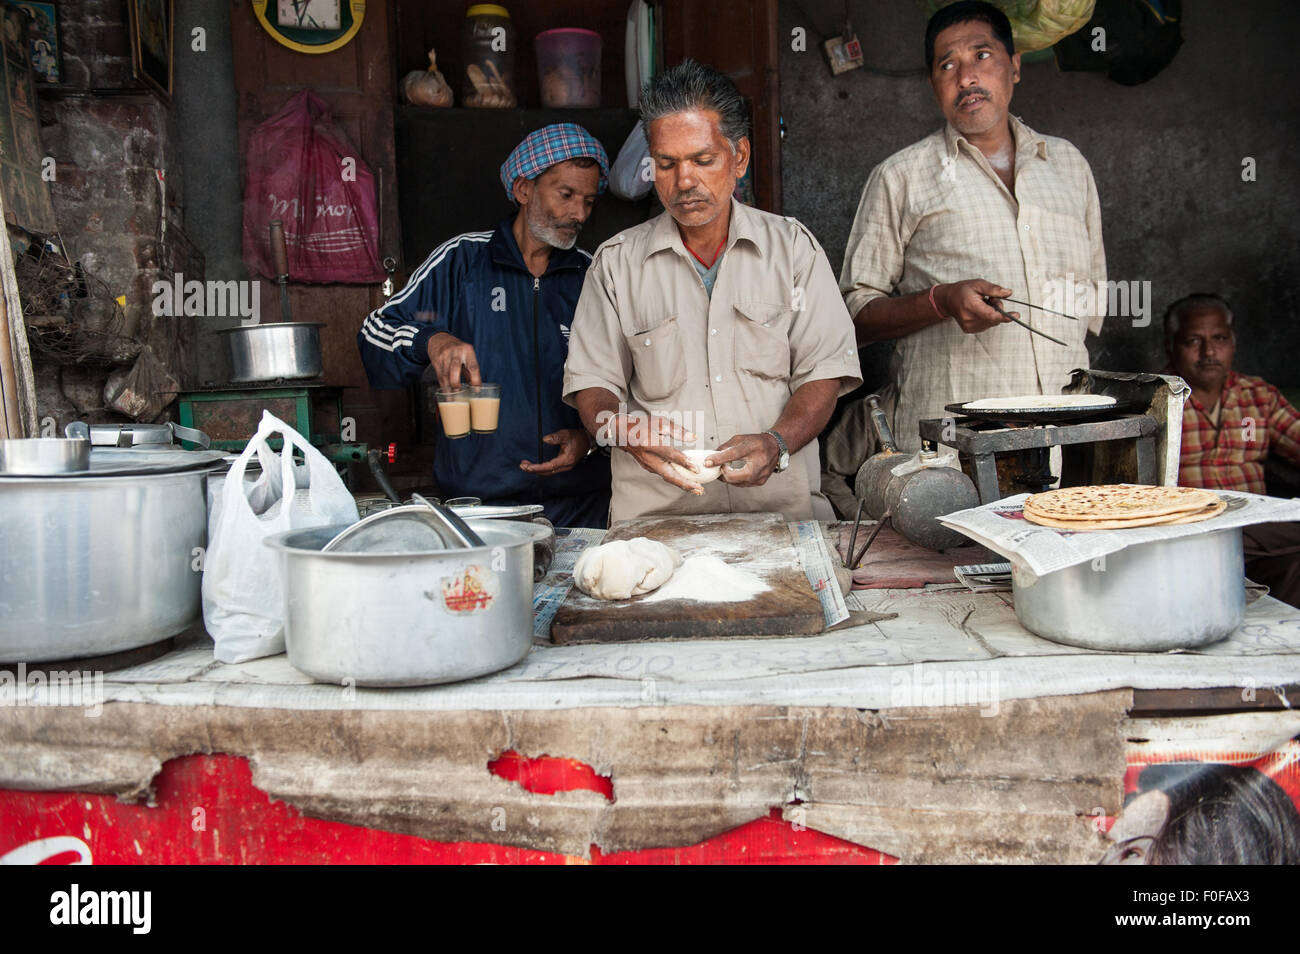 Amritsar, Punjab, India. Three men working at a street food stall, preparing chai tea and chapati bread. Stock Photo